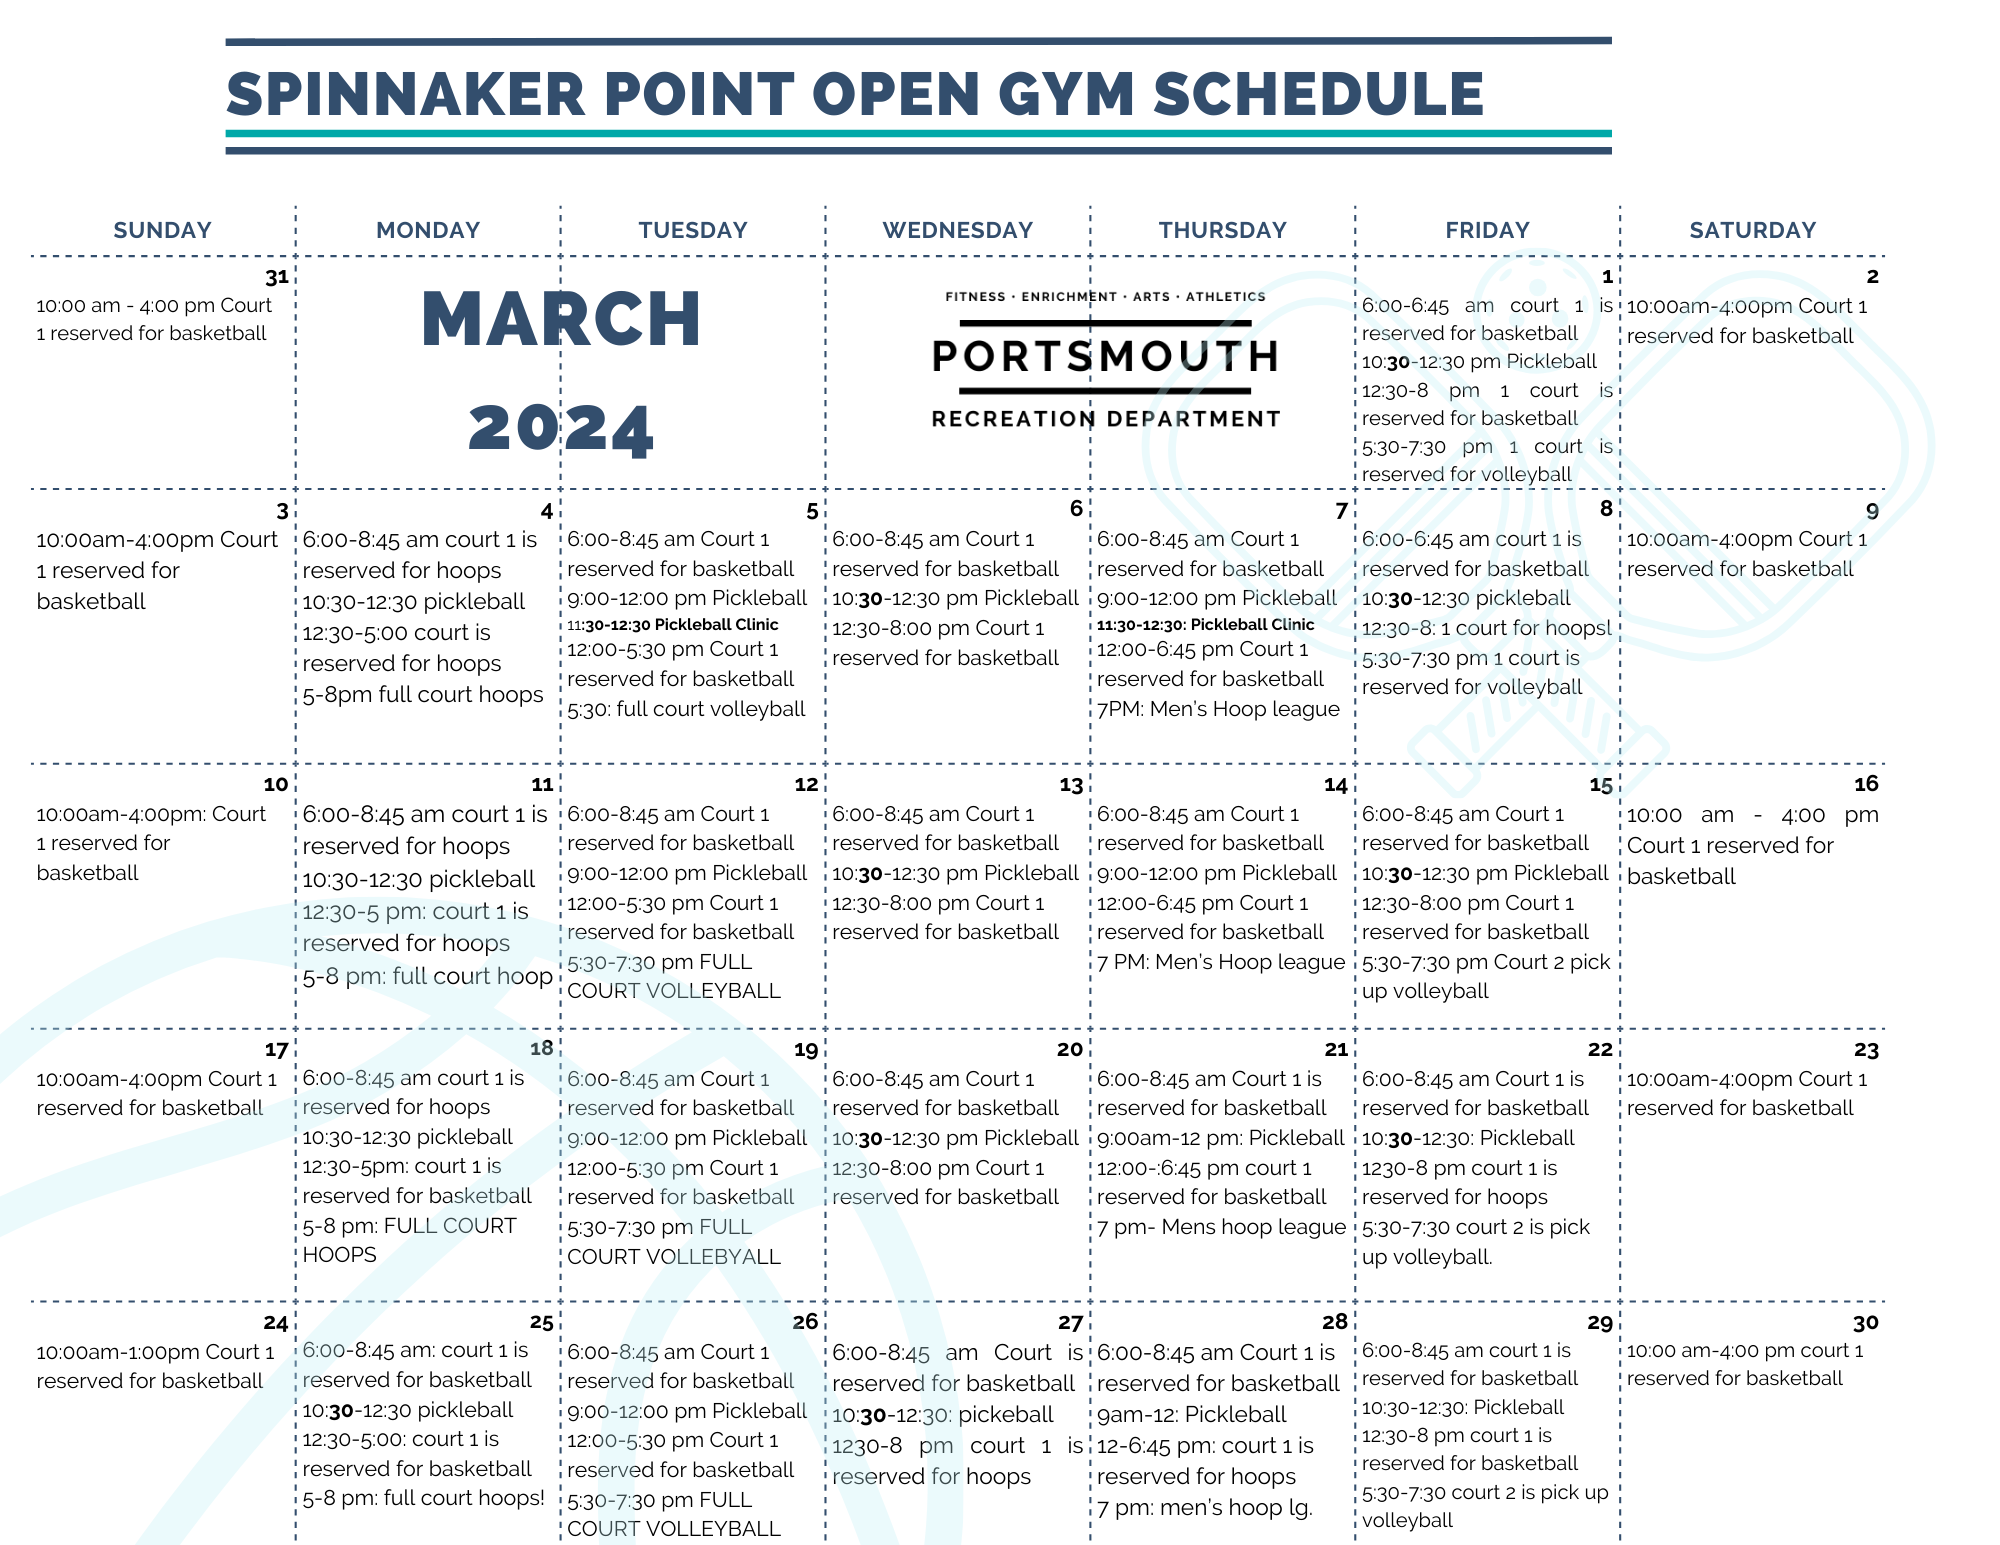 Spin Open Gym Schedule